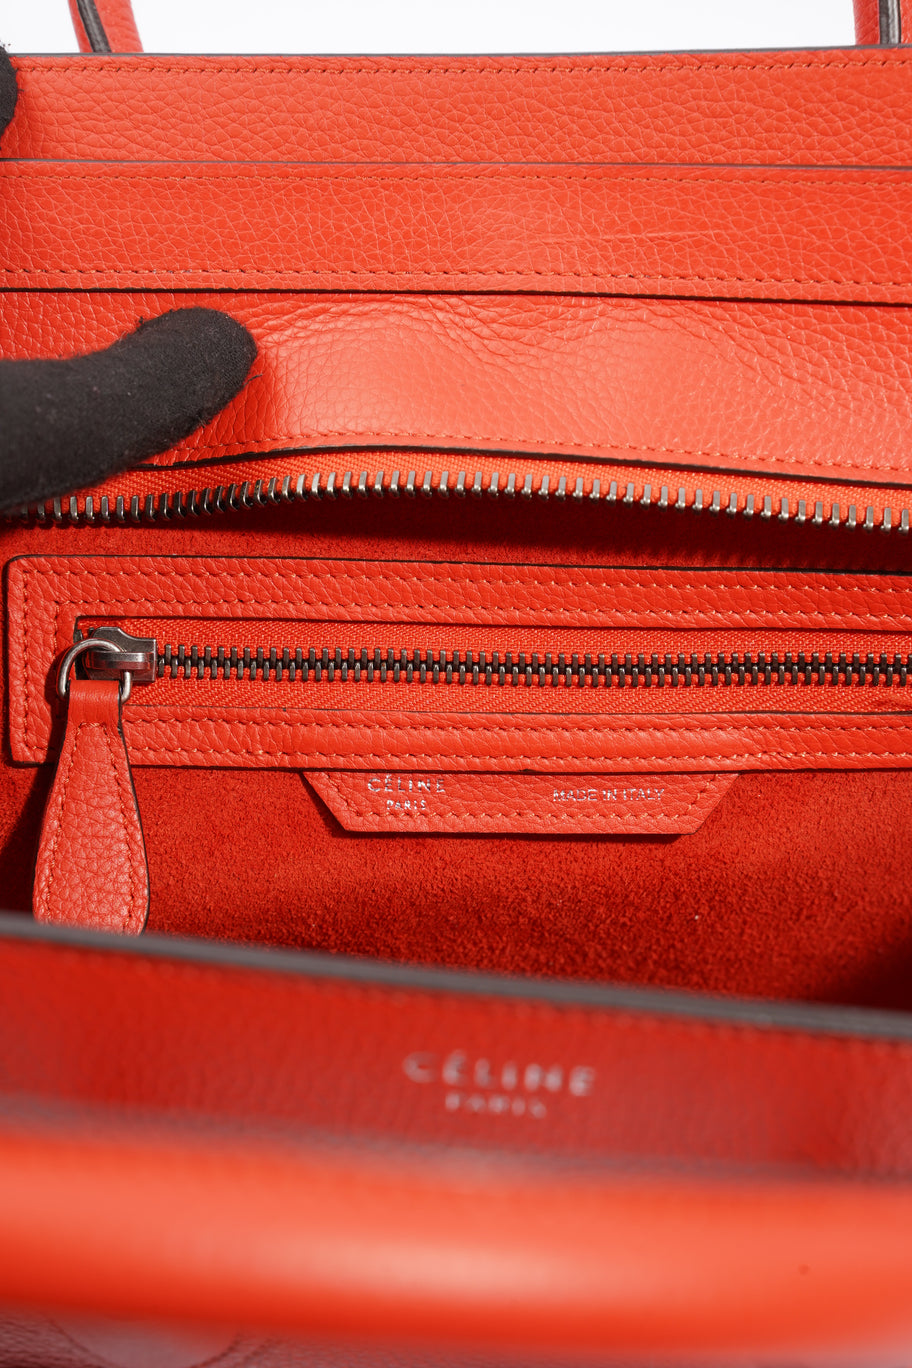 Micro Luggage Orange Calfskin Leather Image 10